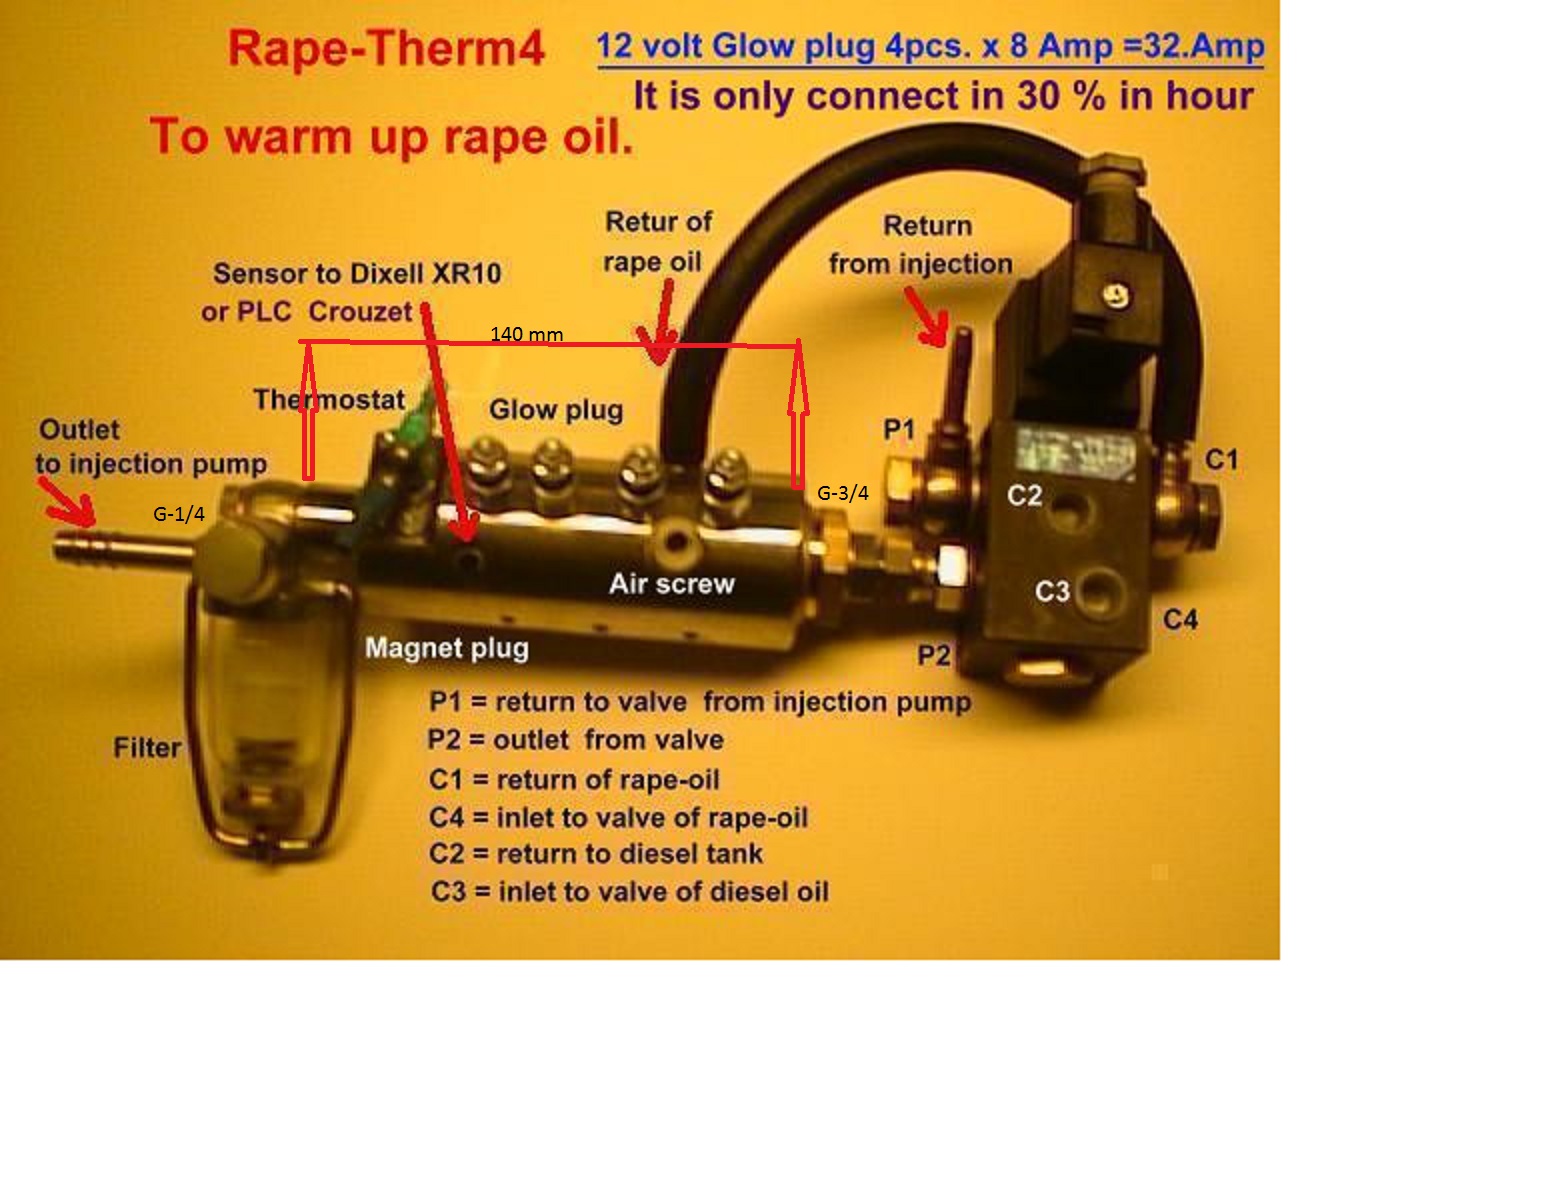 rape-therm-valve62-2002-03-21.jpg